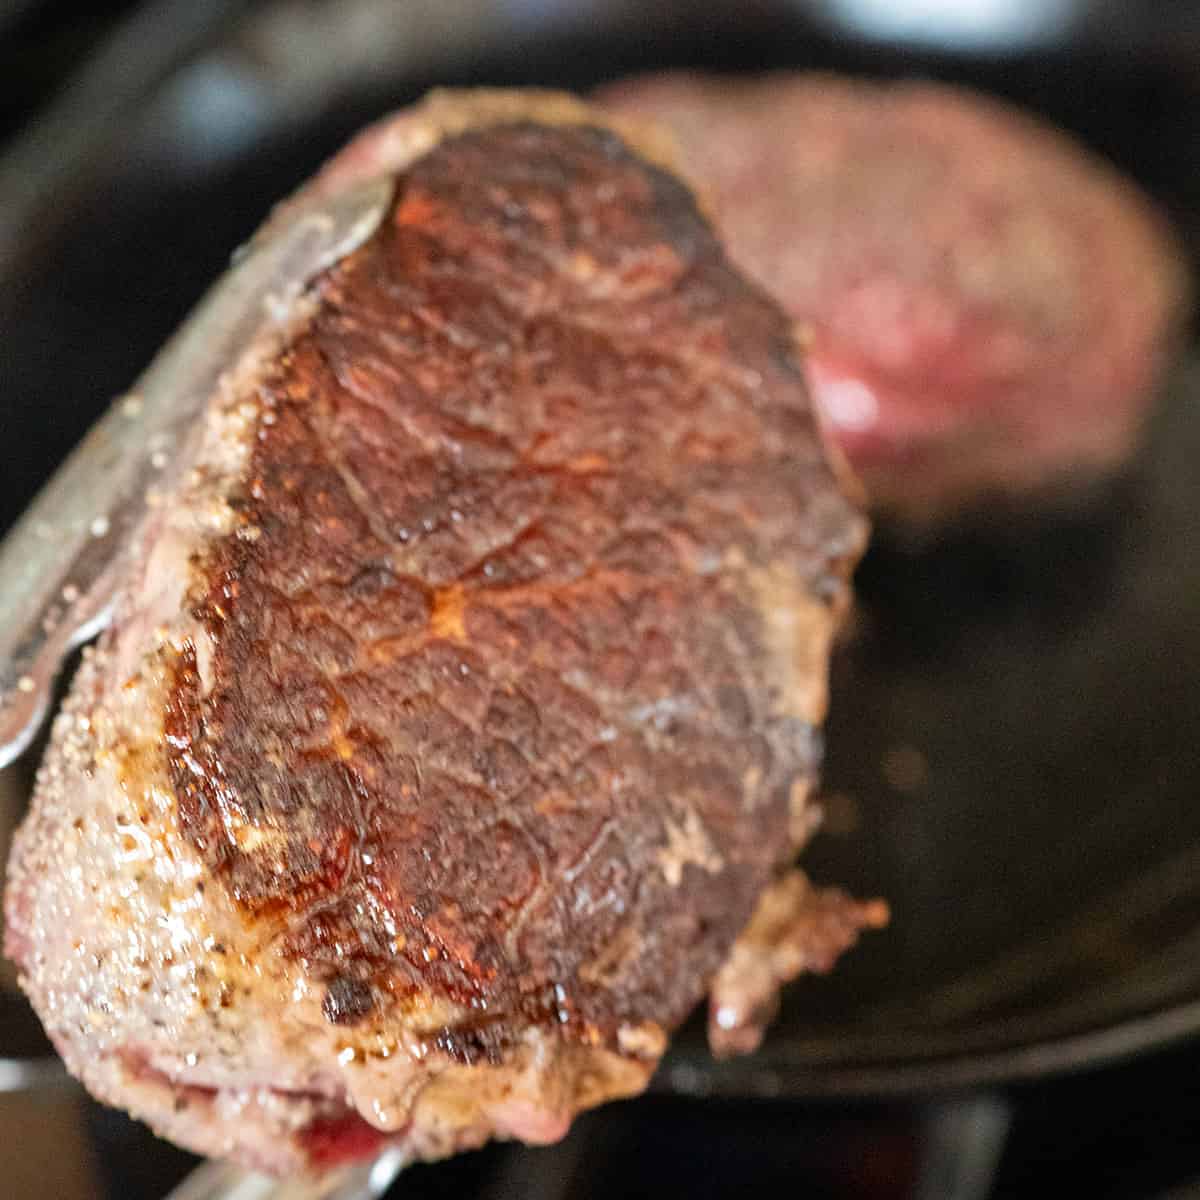 Lifting seared steak to show seared bottom.